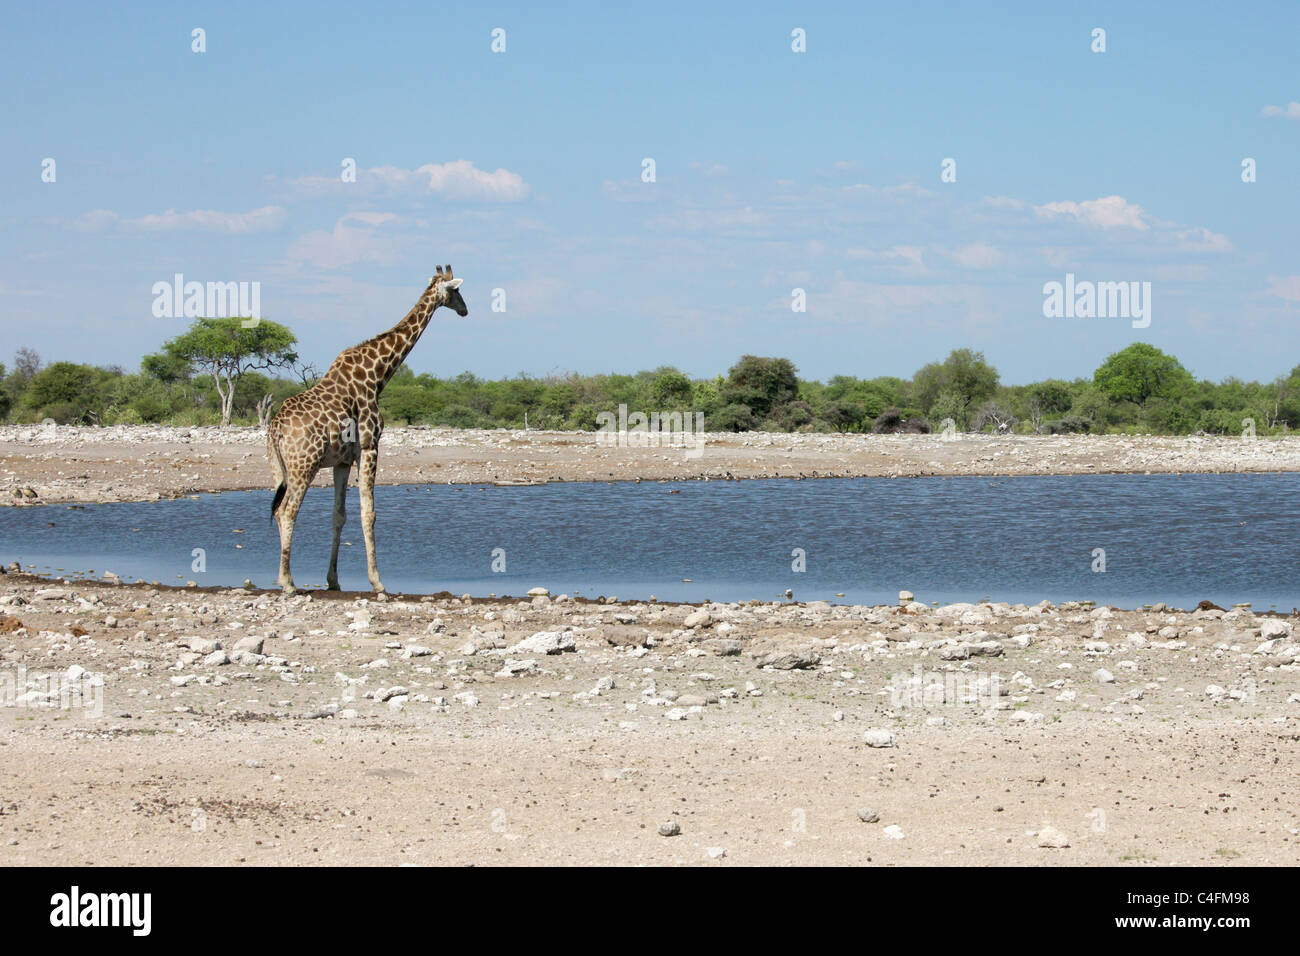 Angolan giraffe (Giraffa camelopardalis angolensis) in Etosha National Park, Namibia. Stock Photo